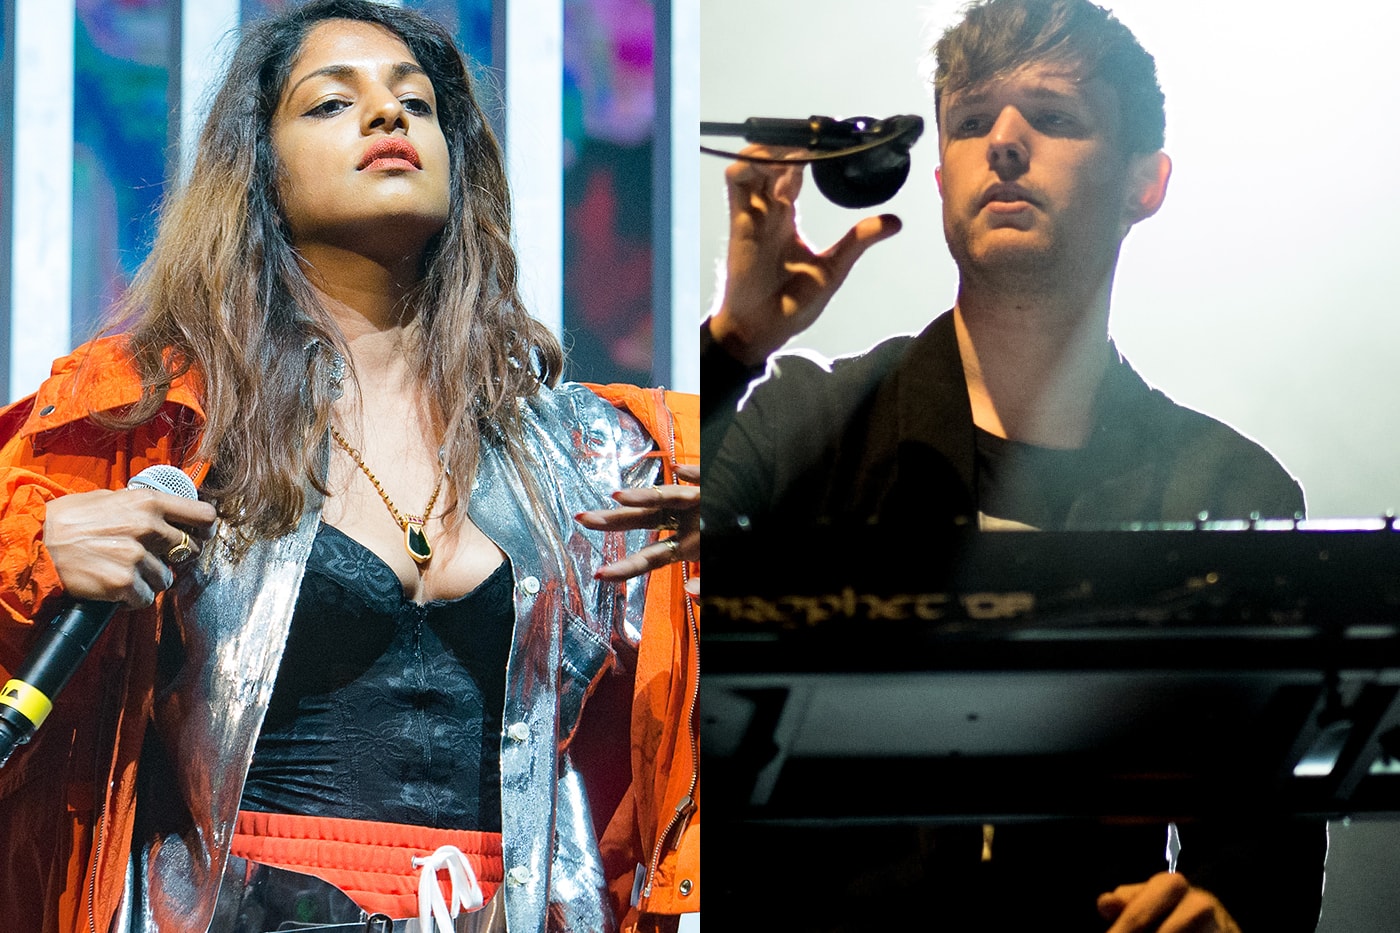 2022 Portola Music Festival lineup dates Announcement m i a james blake san francisco 